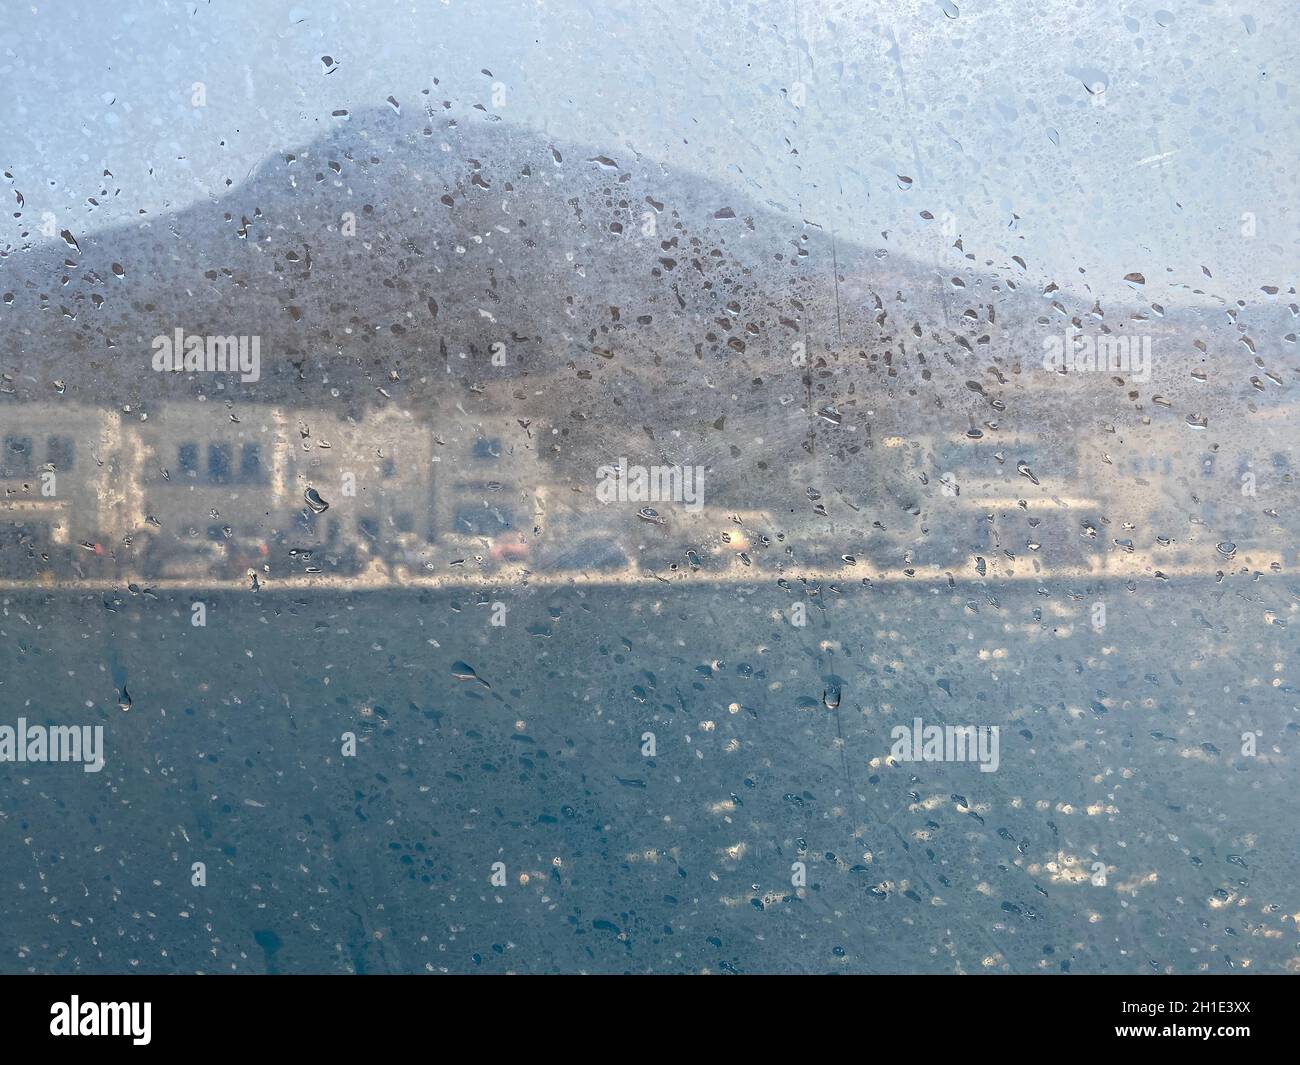 Melancholy coastal view seen through a window boat, Greece island, cyclades, Travel background Stock Photo